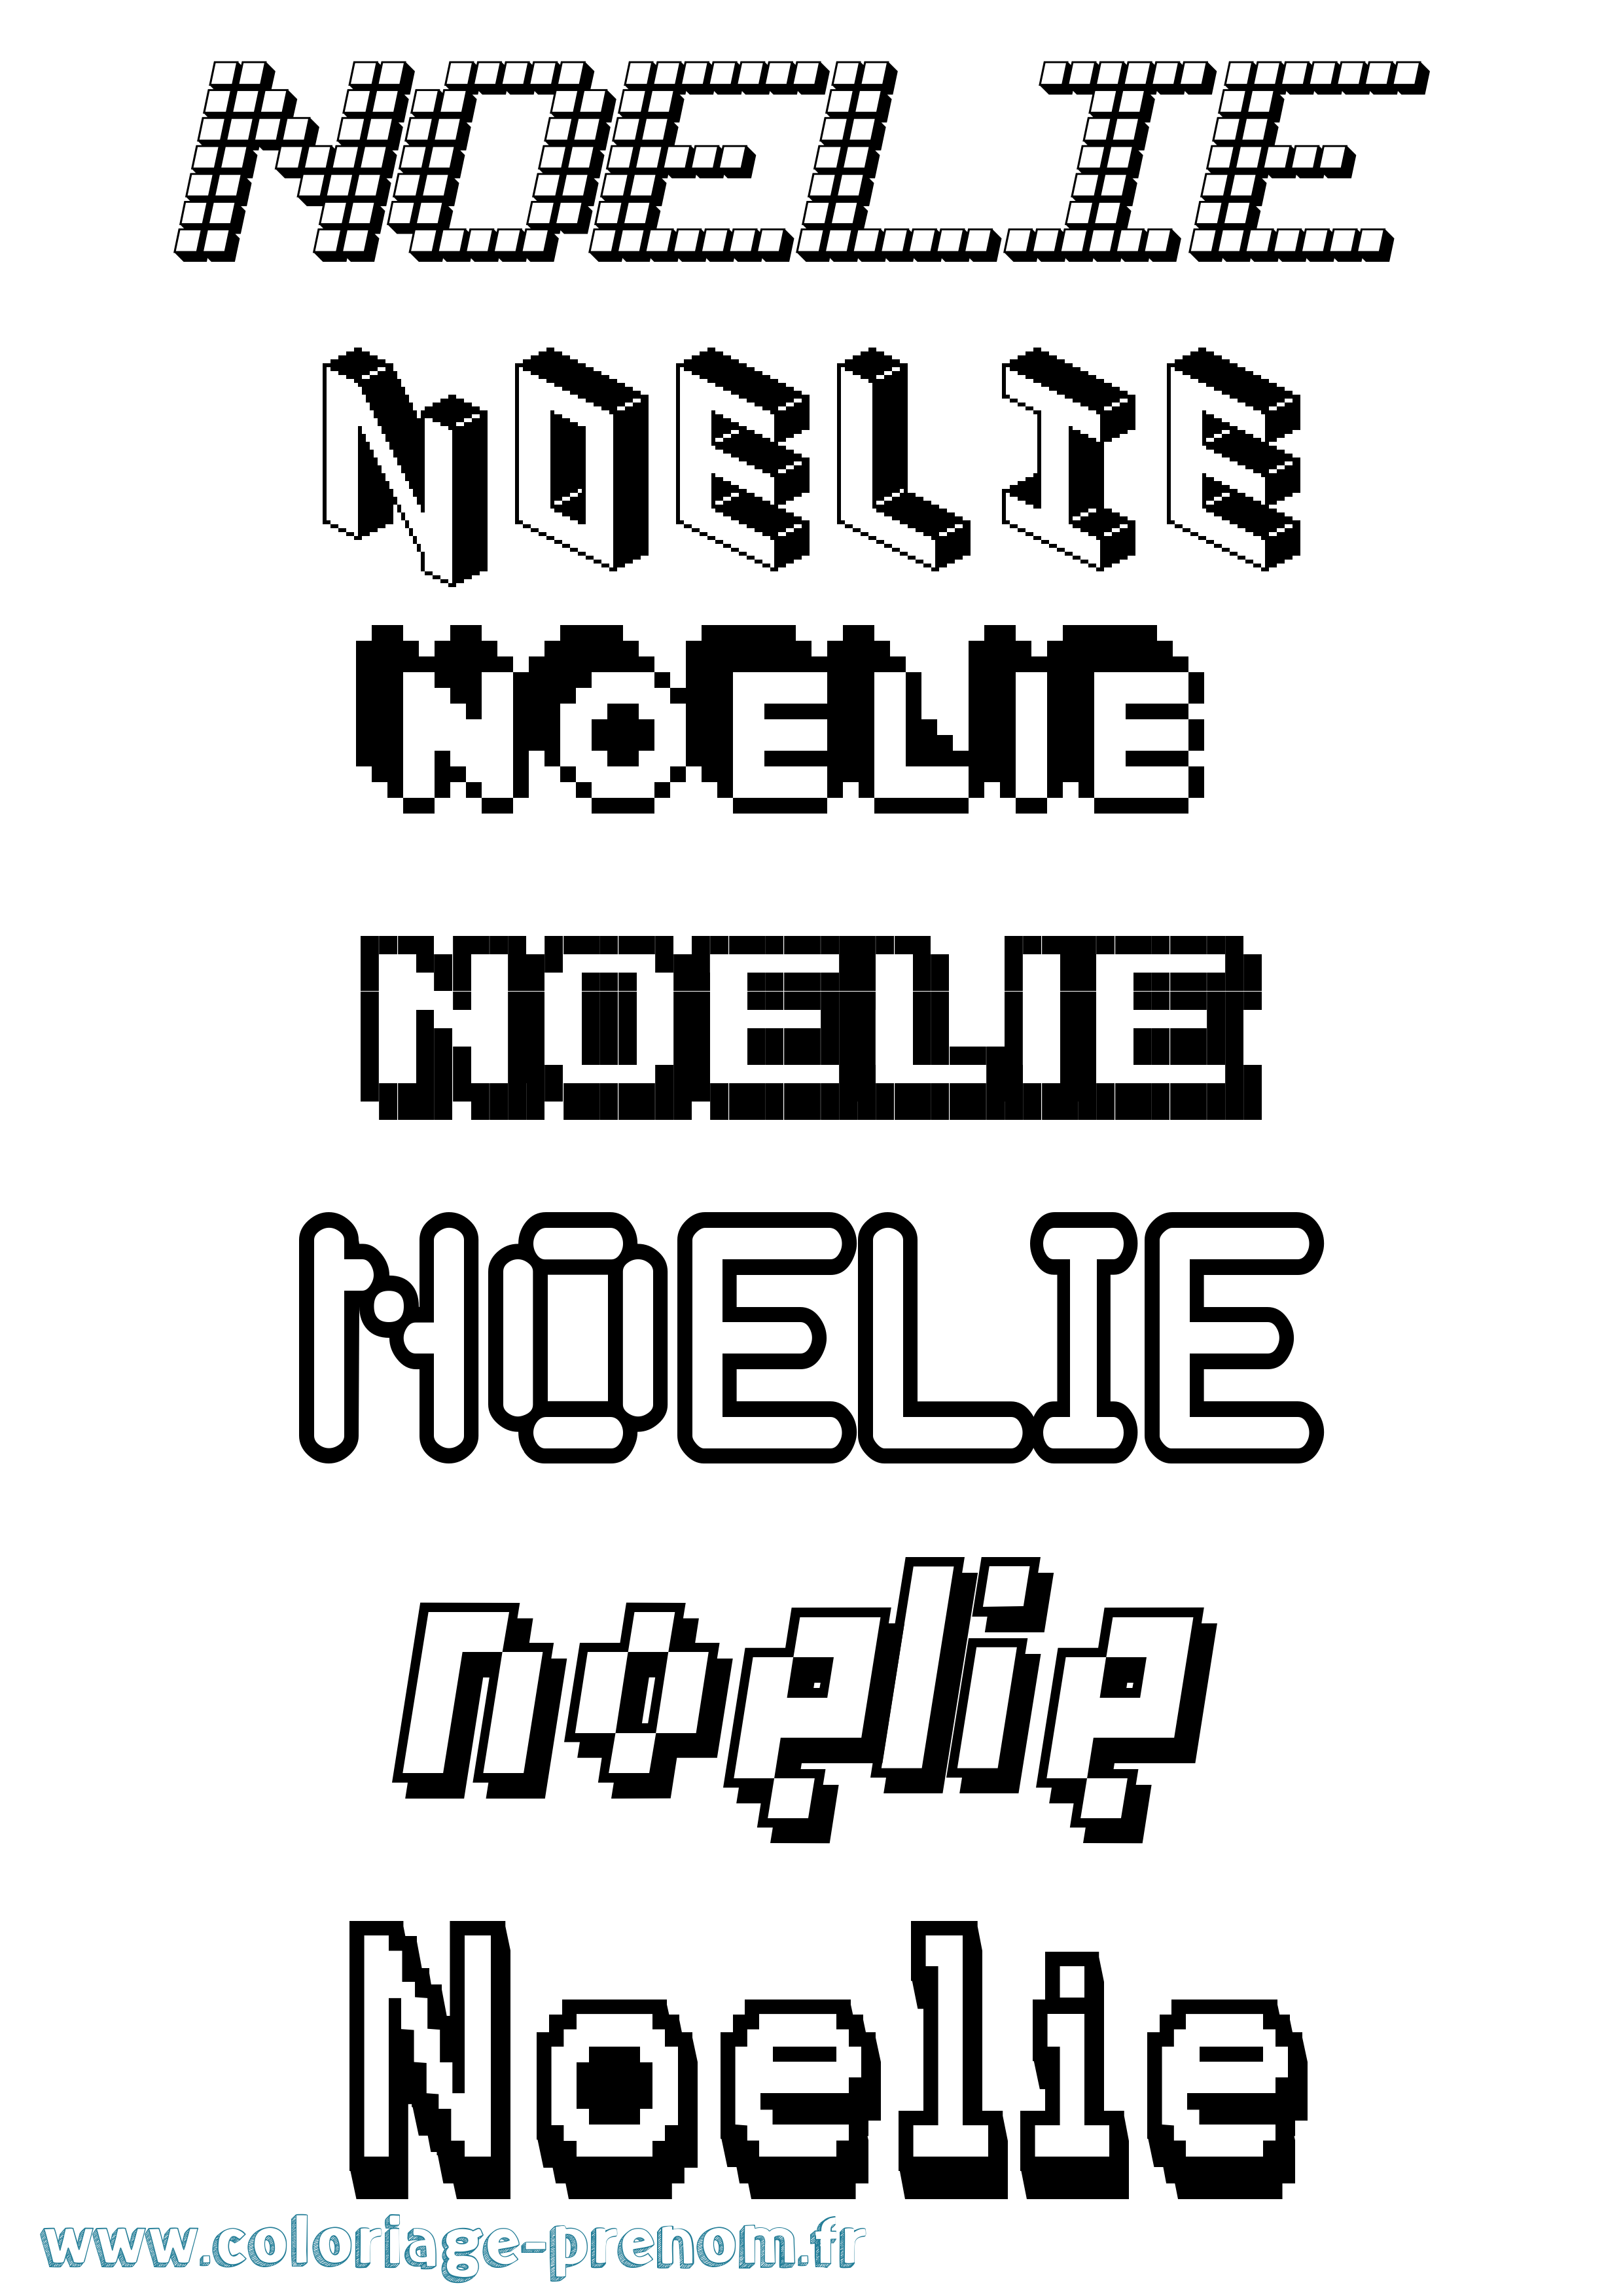 Coloriage prénom Noelie